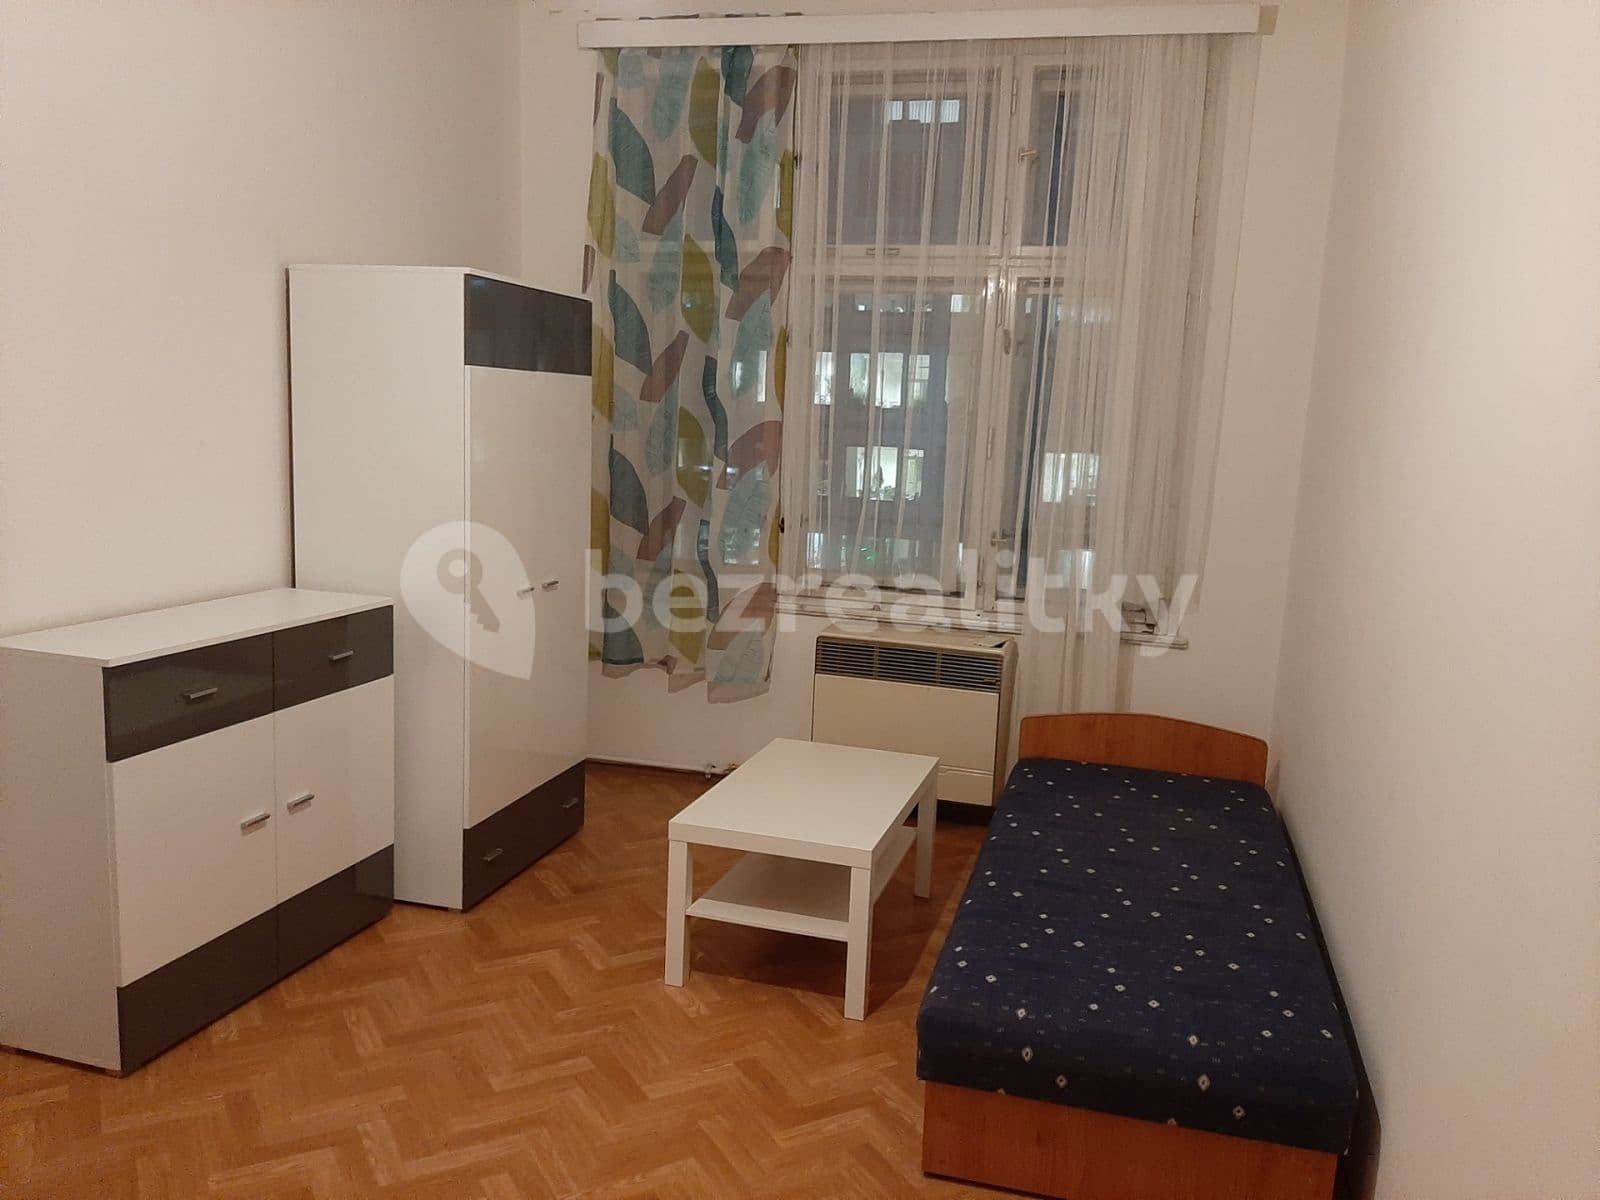 2 bedroom flat to rent, 52 m², Pobřežní, Prague, Prague